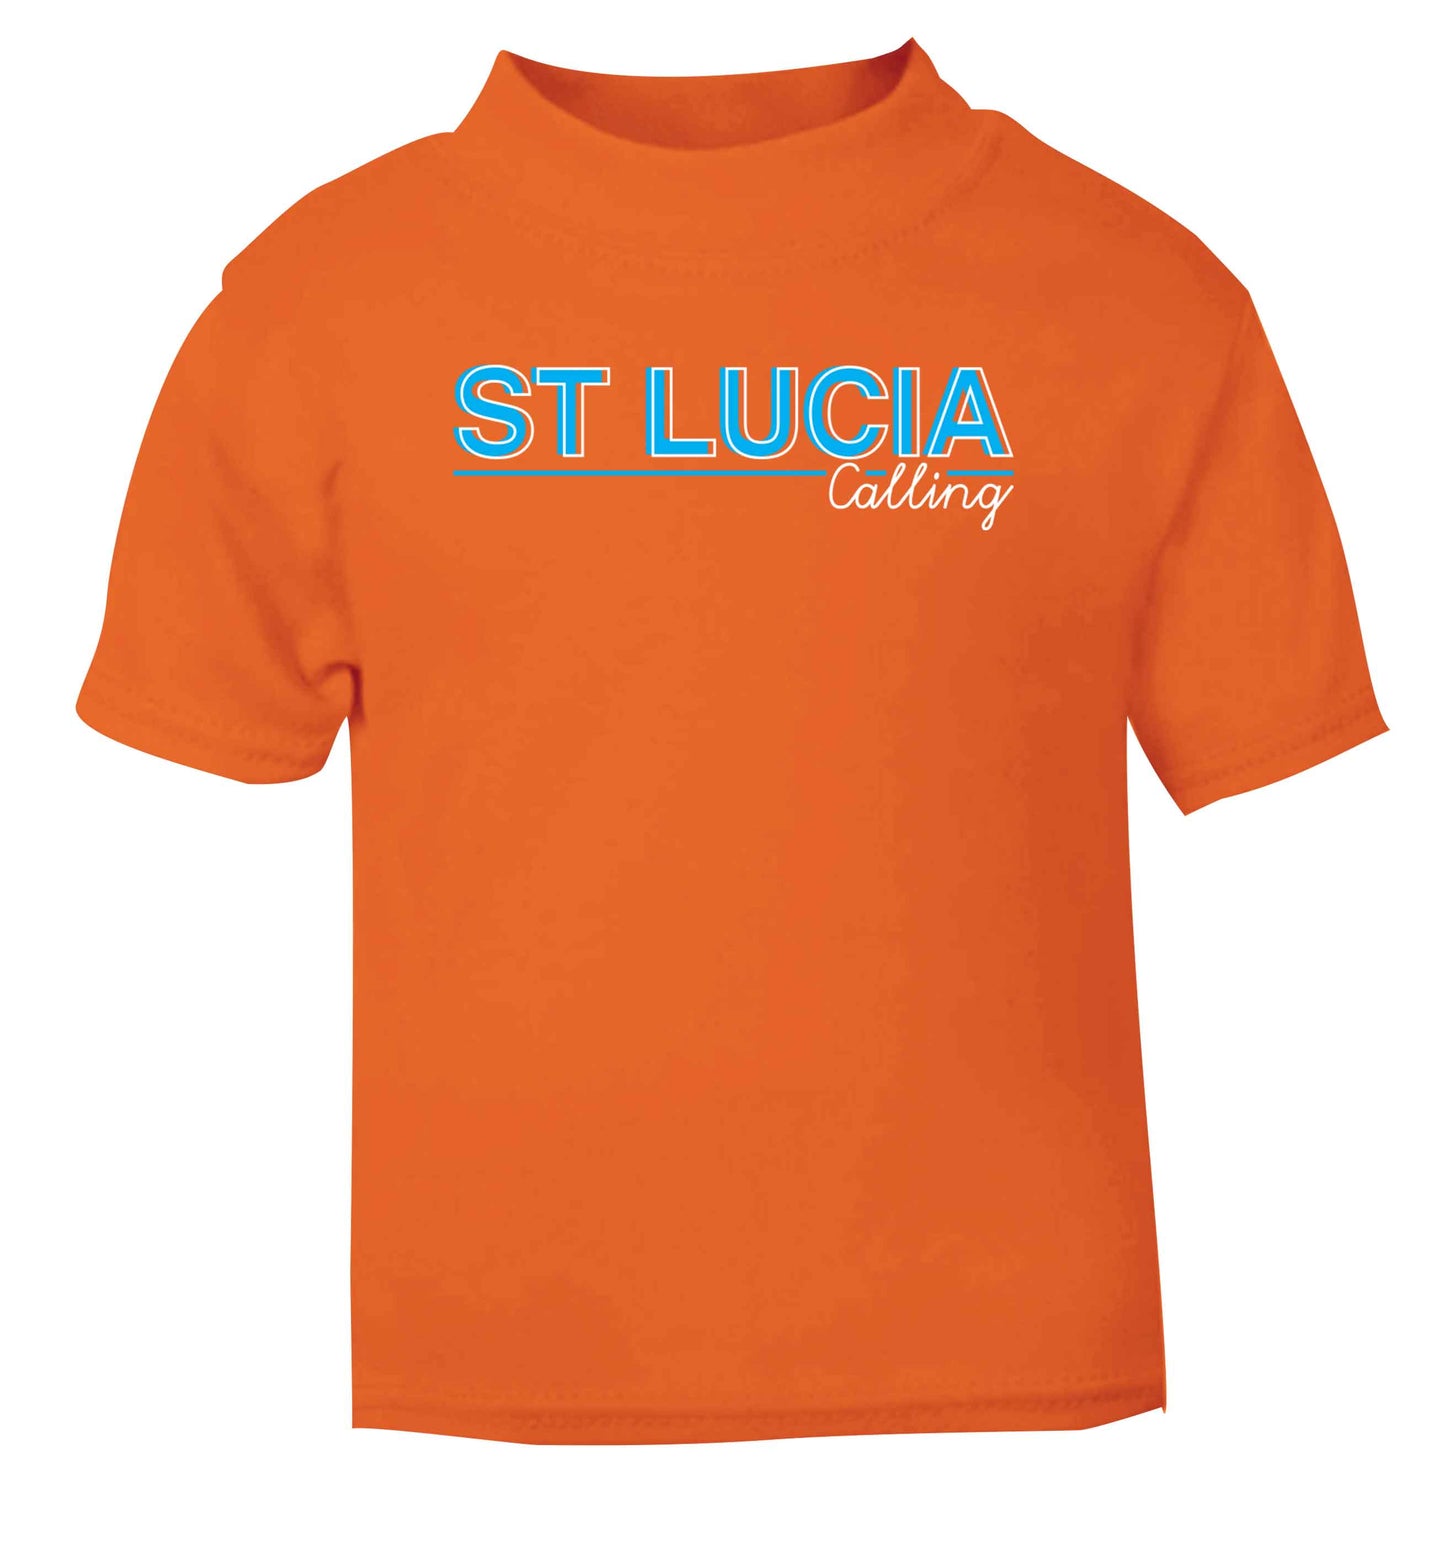 St Lucia calling orange Baby Toddler Tshirt 2 Years